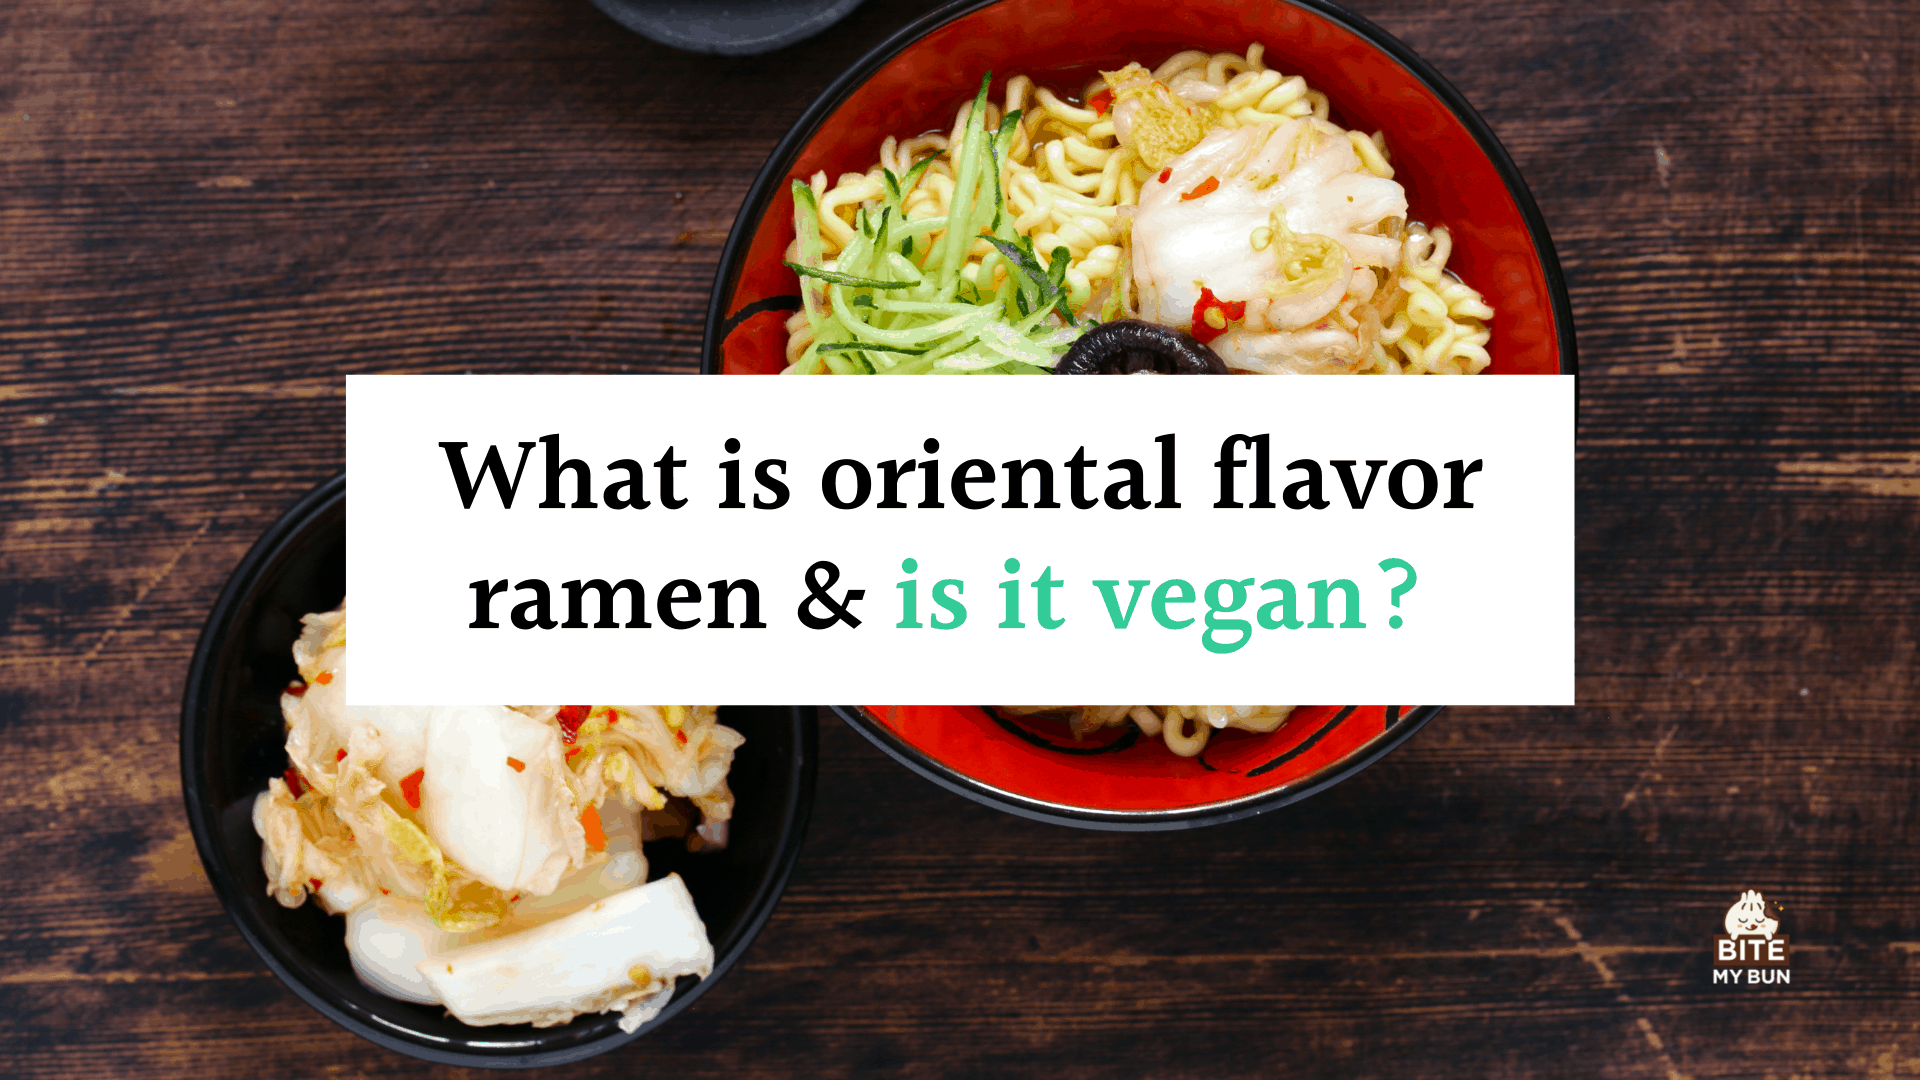 What is oriental flavor ramen & is it vegan? You'd be surprised!